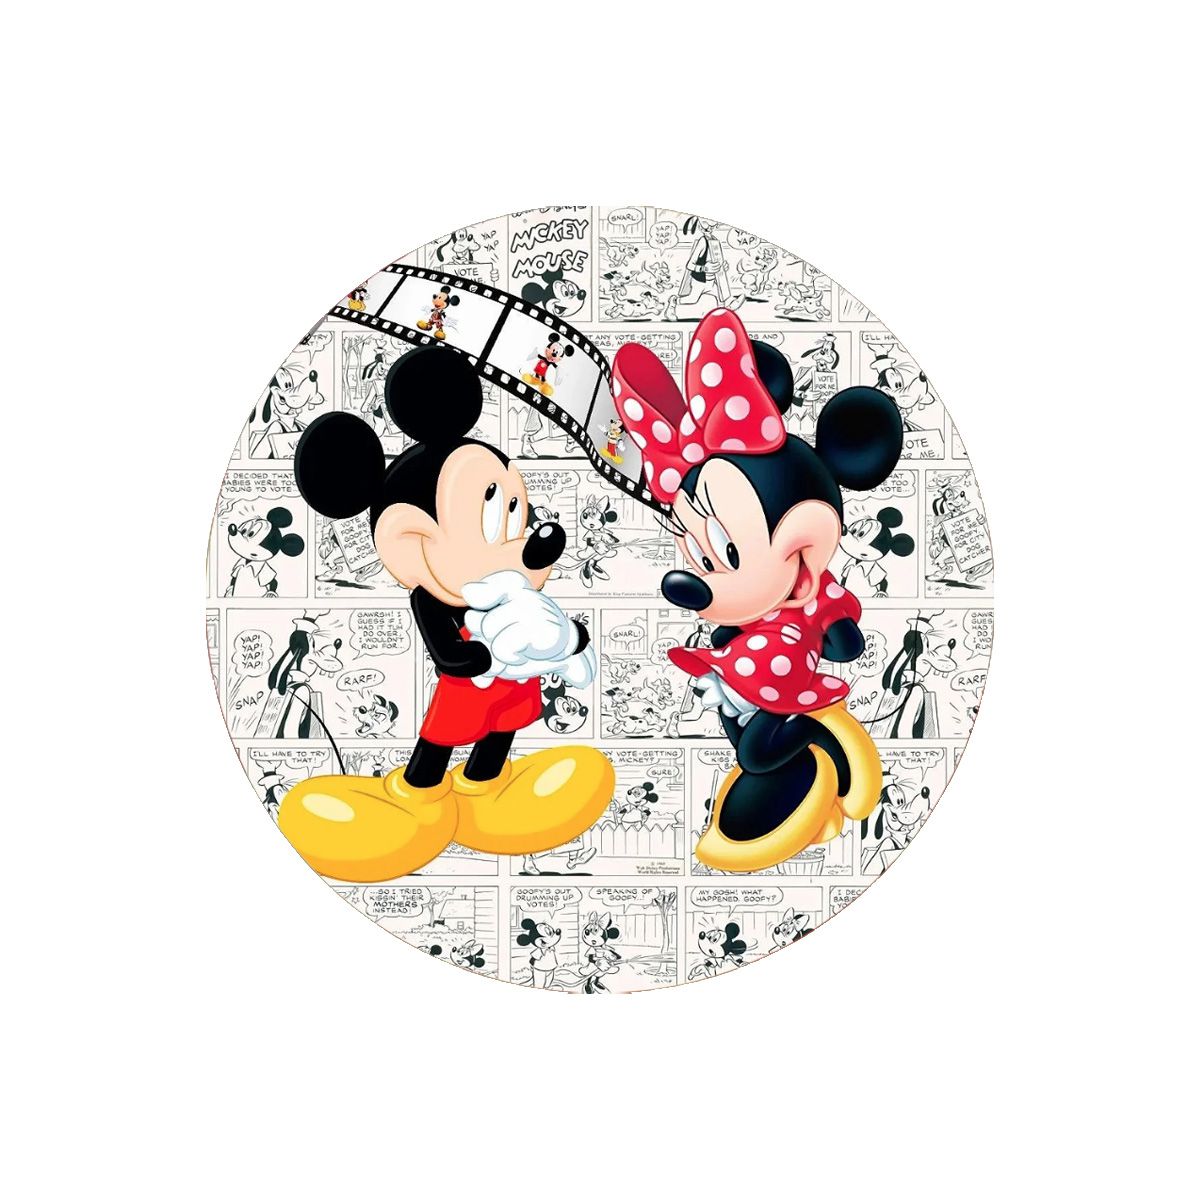 Capa Painel Redondo Sublimados Tema Minnie Mouse 7... - Painel Festivo